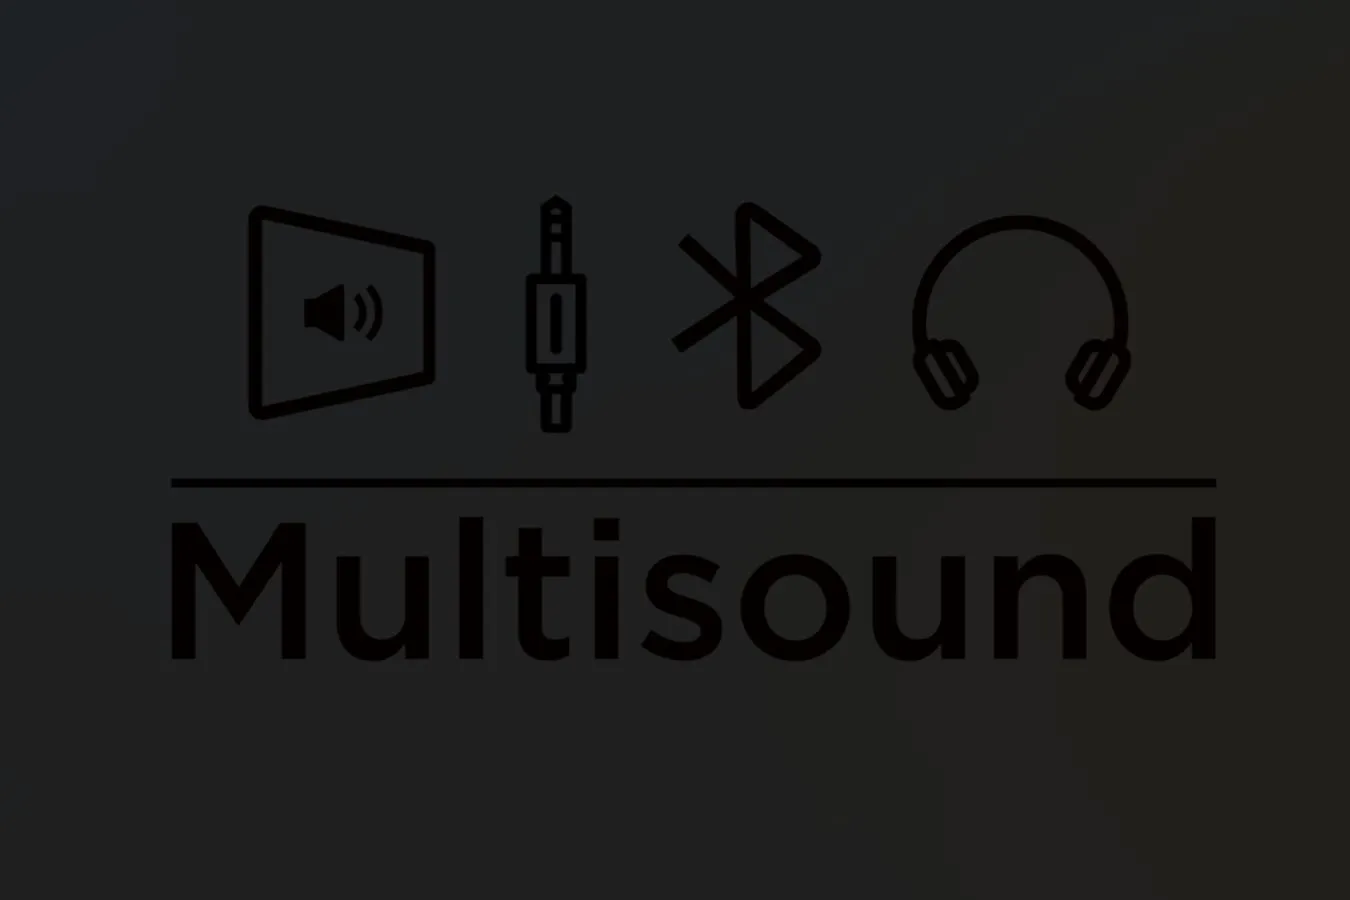 Multisound